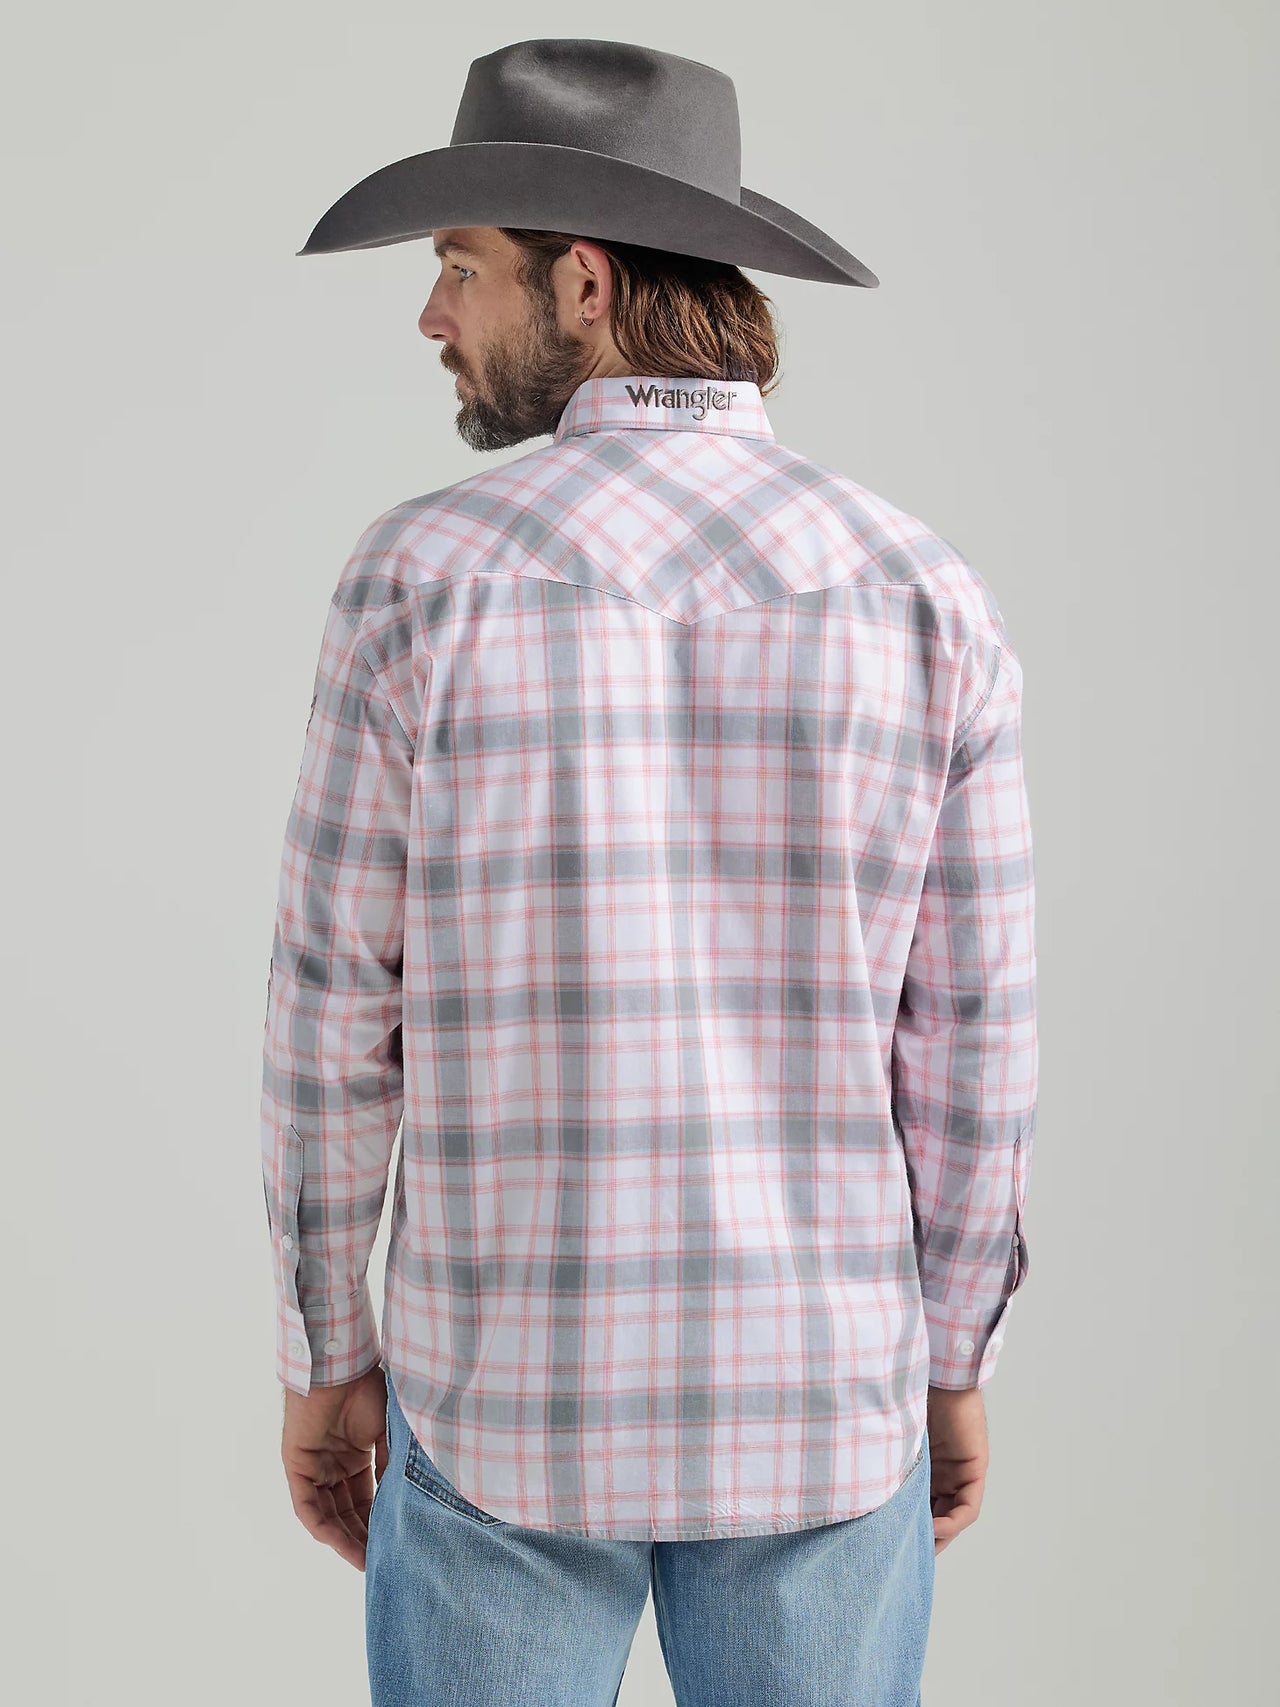 Wrangler Logo Western Long Sleeve Snap Shirt Grey Plaid - The Trading Stables